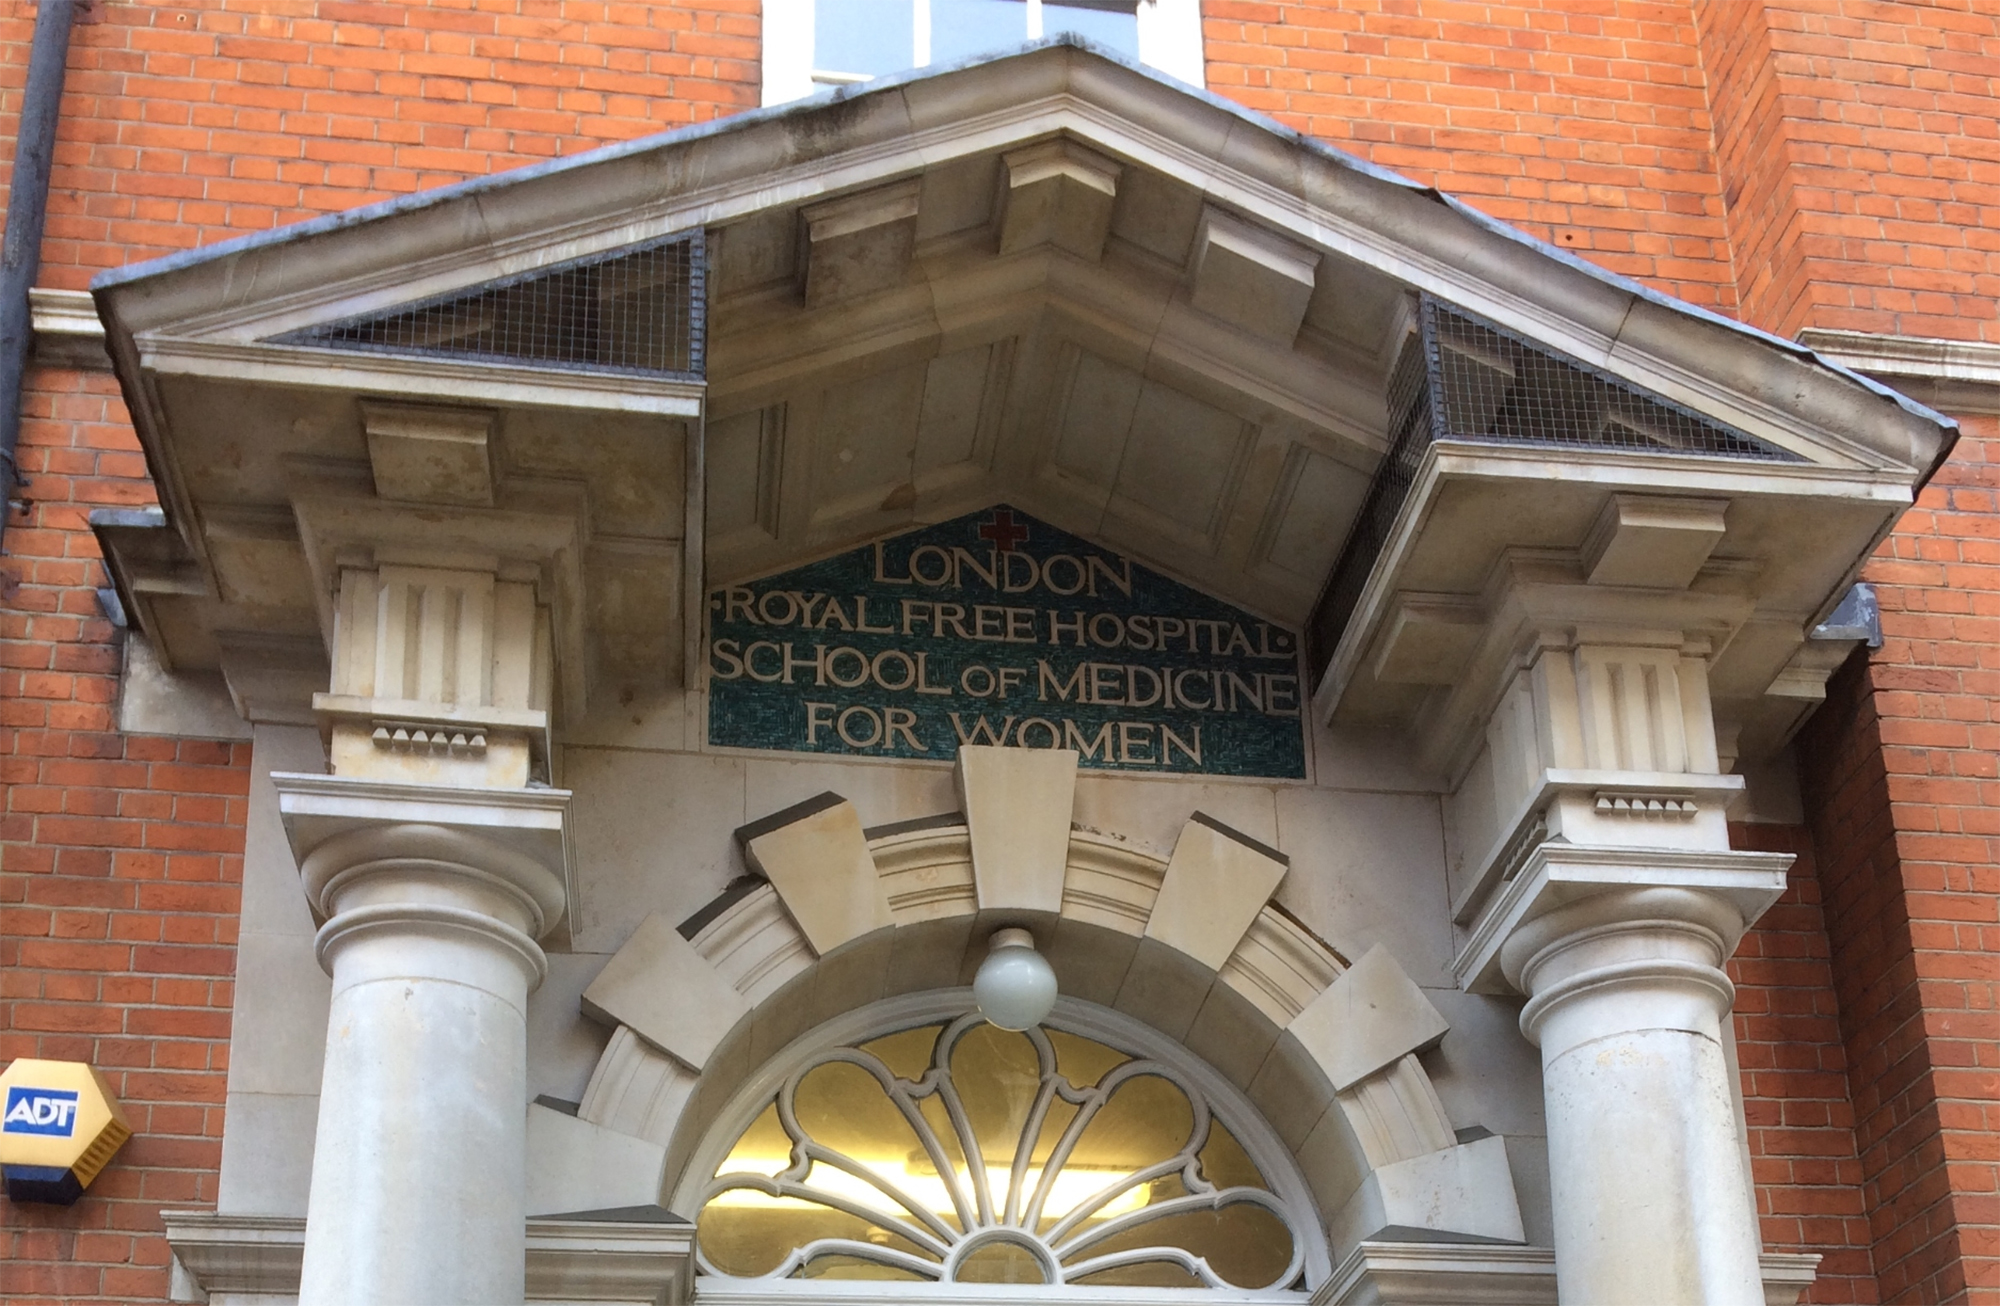 London (Royal Free Hospital) School of Medicine for Women wording above fanlight of entrance.